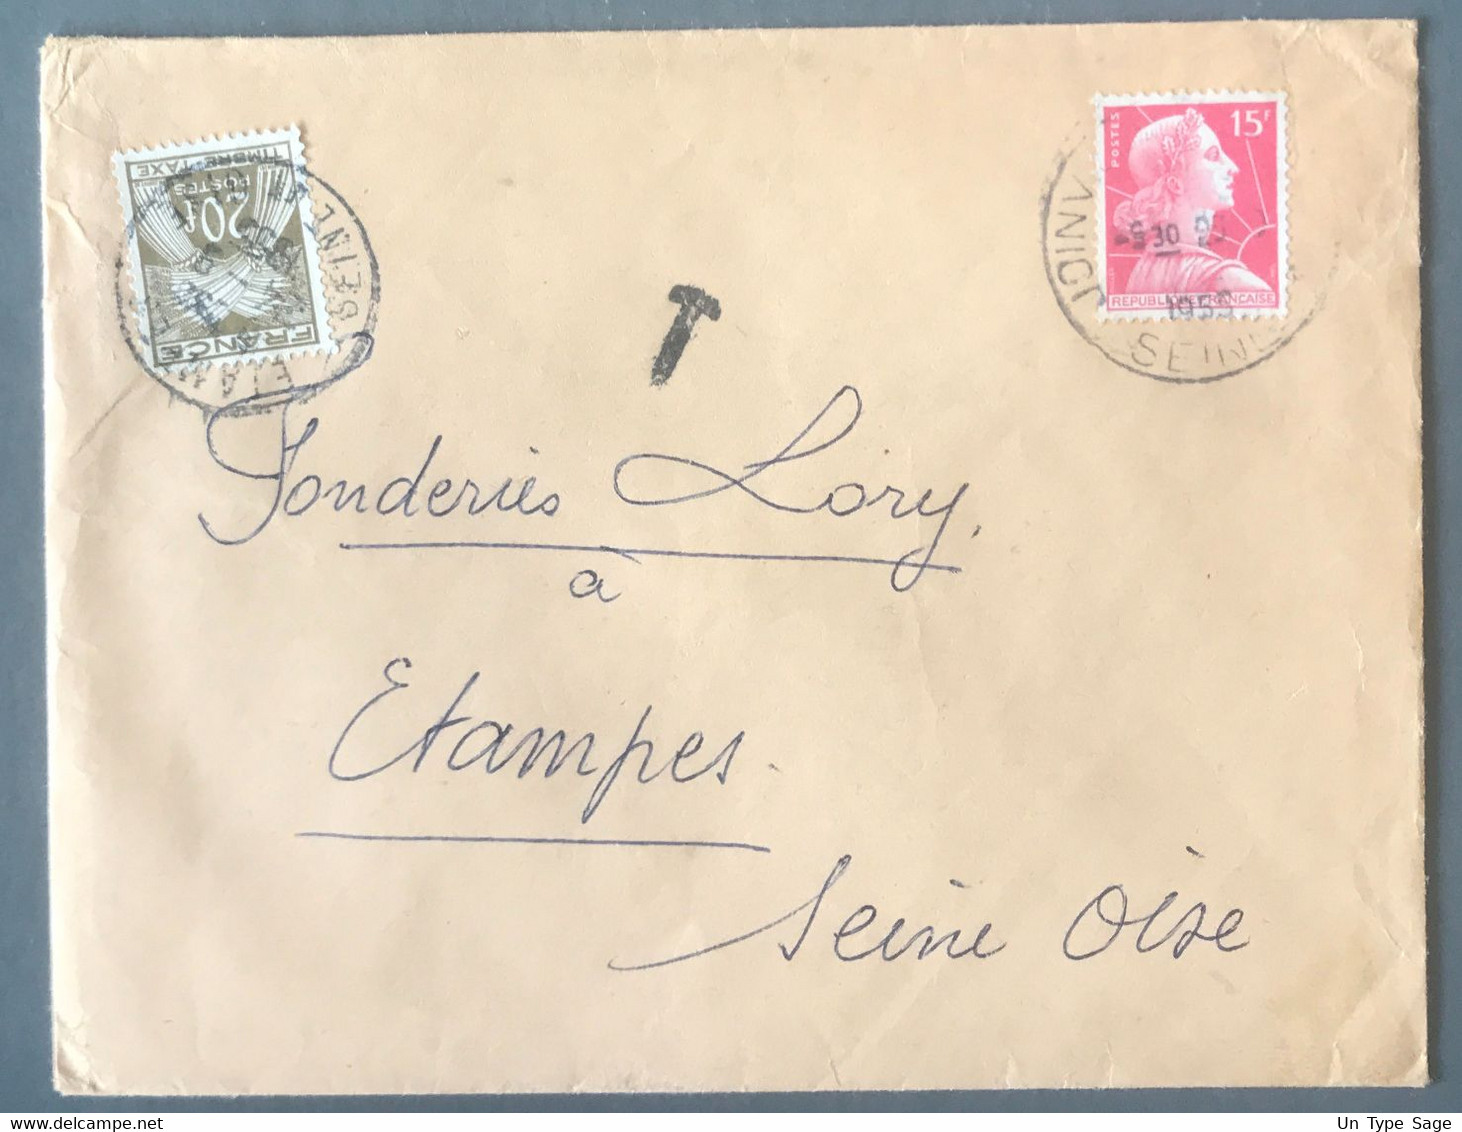 France Taxe N°87 Sur Enveloppe 1955 - (C1494) - 1859-1959 Storia Postale